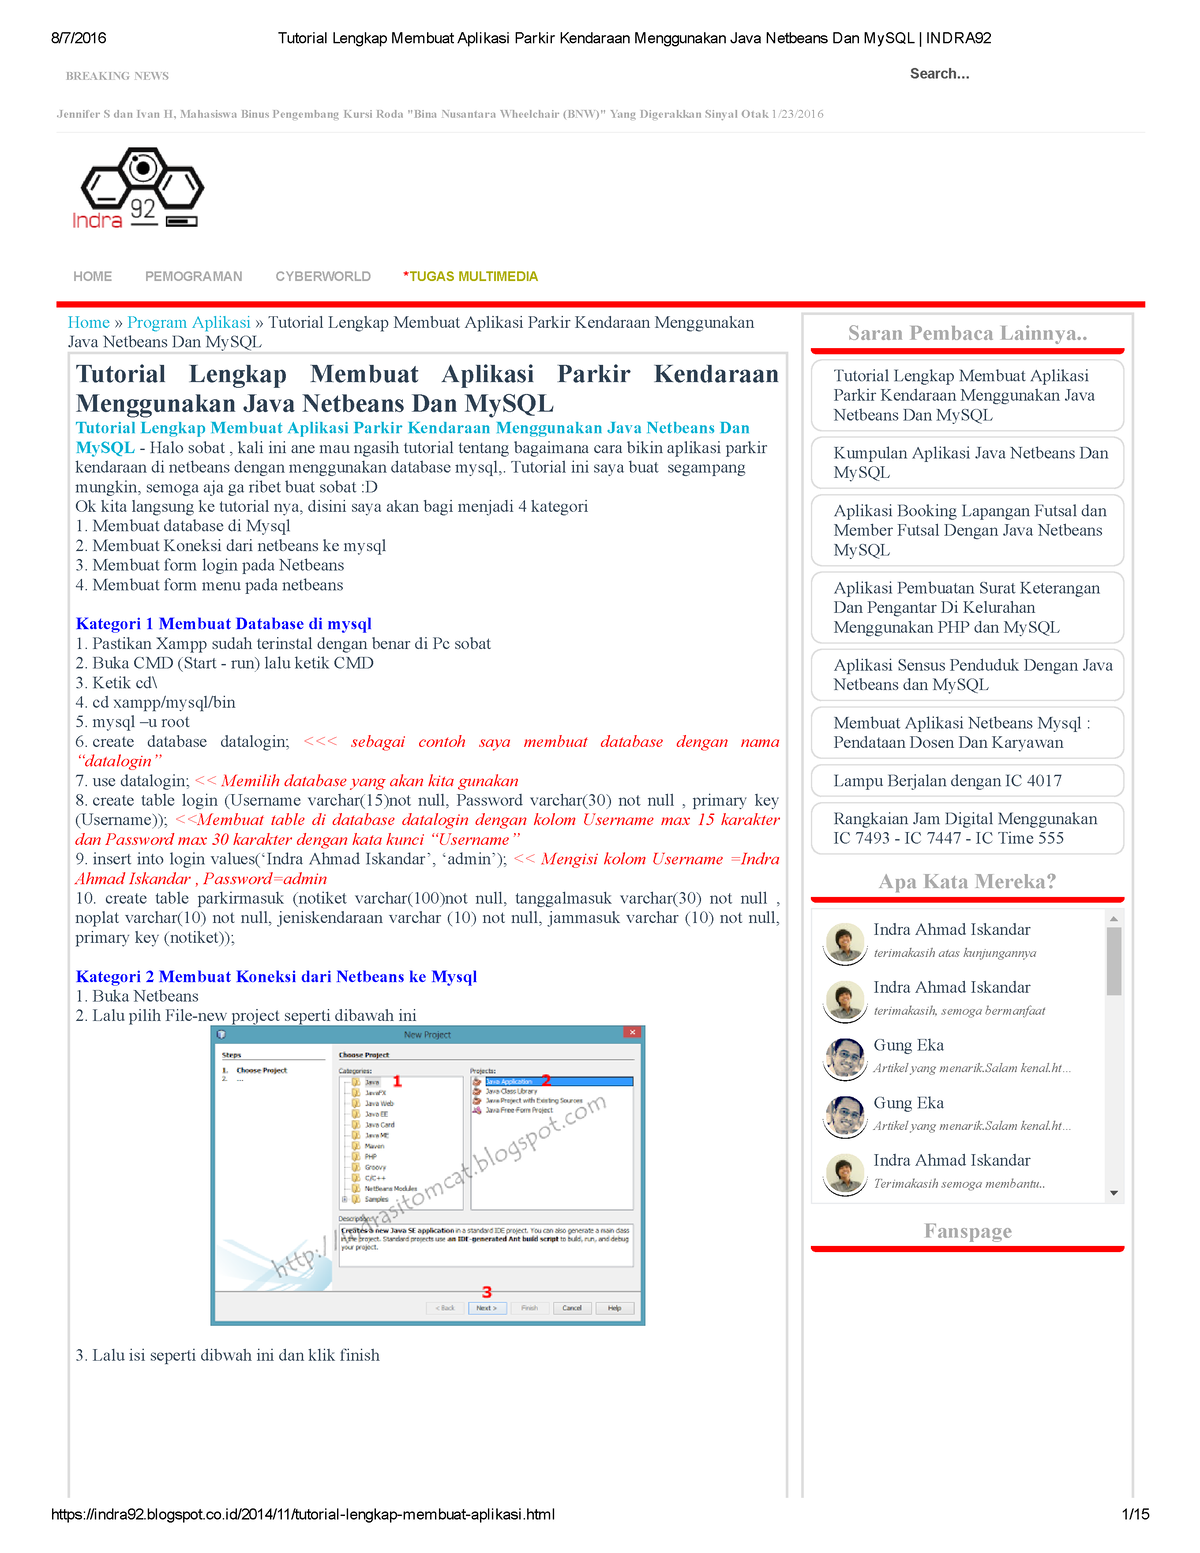 Tutorial Lengkap Membuat Aplikasi Parkir Kendaraan Menggunakan Java Netbeans Dan My Sql Indra 92 9016